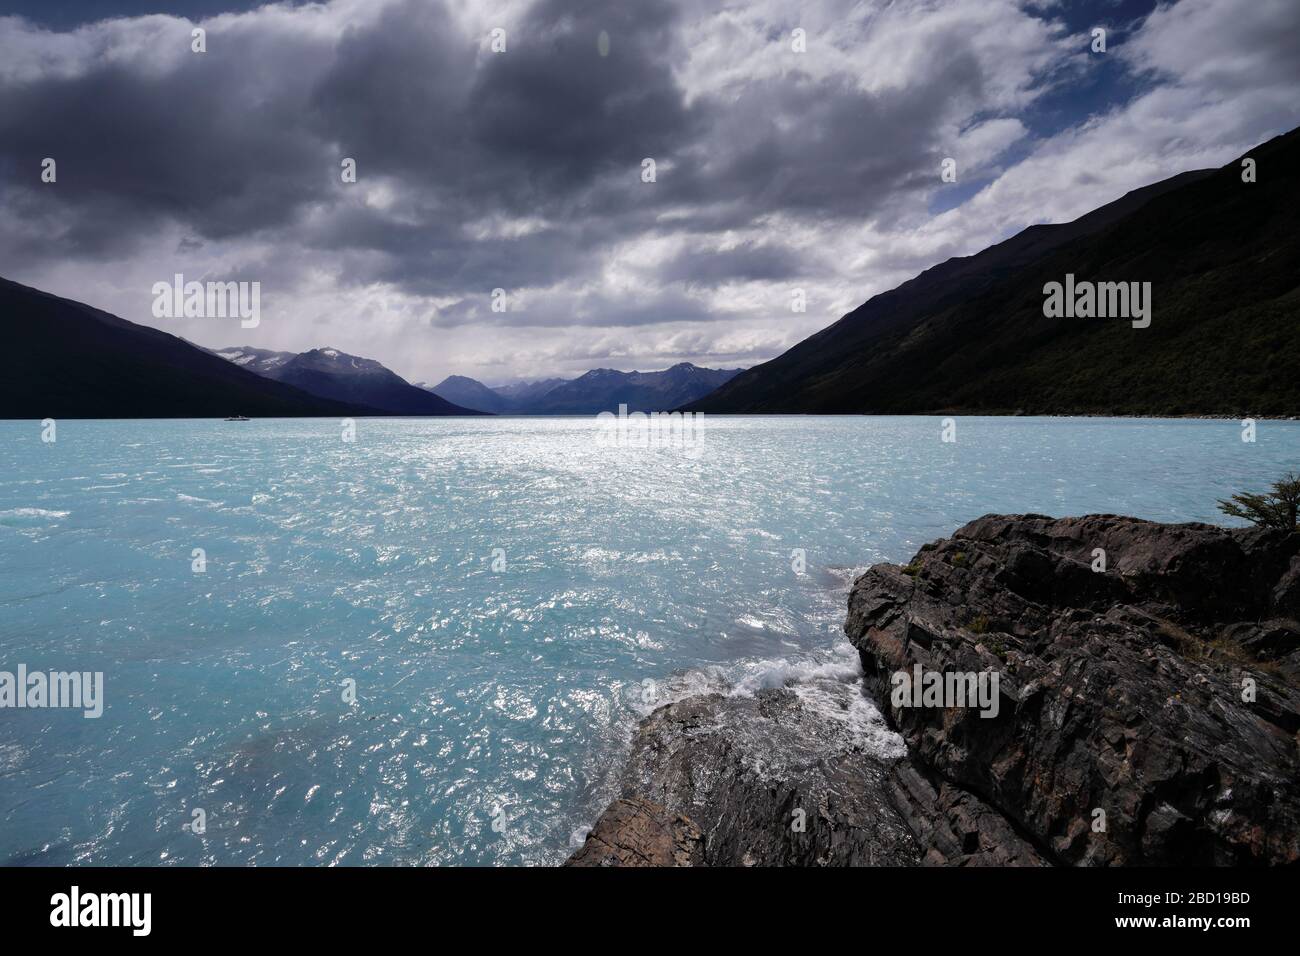 View of the Argentino Lake, Los Glaciares National Park, Santa Cruz Province, Argentina Stock Photo